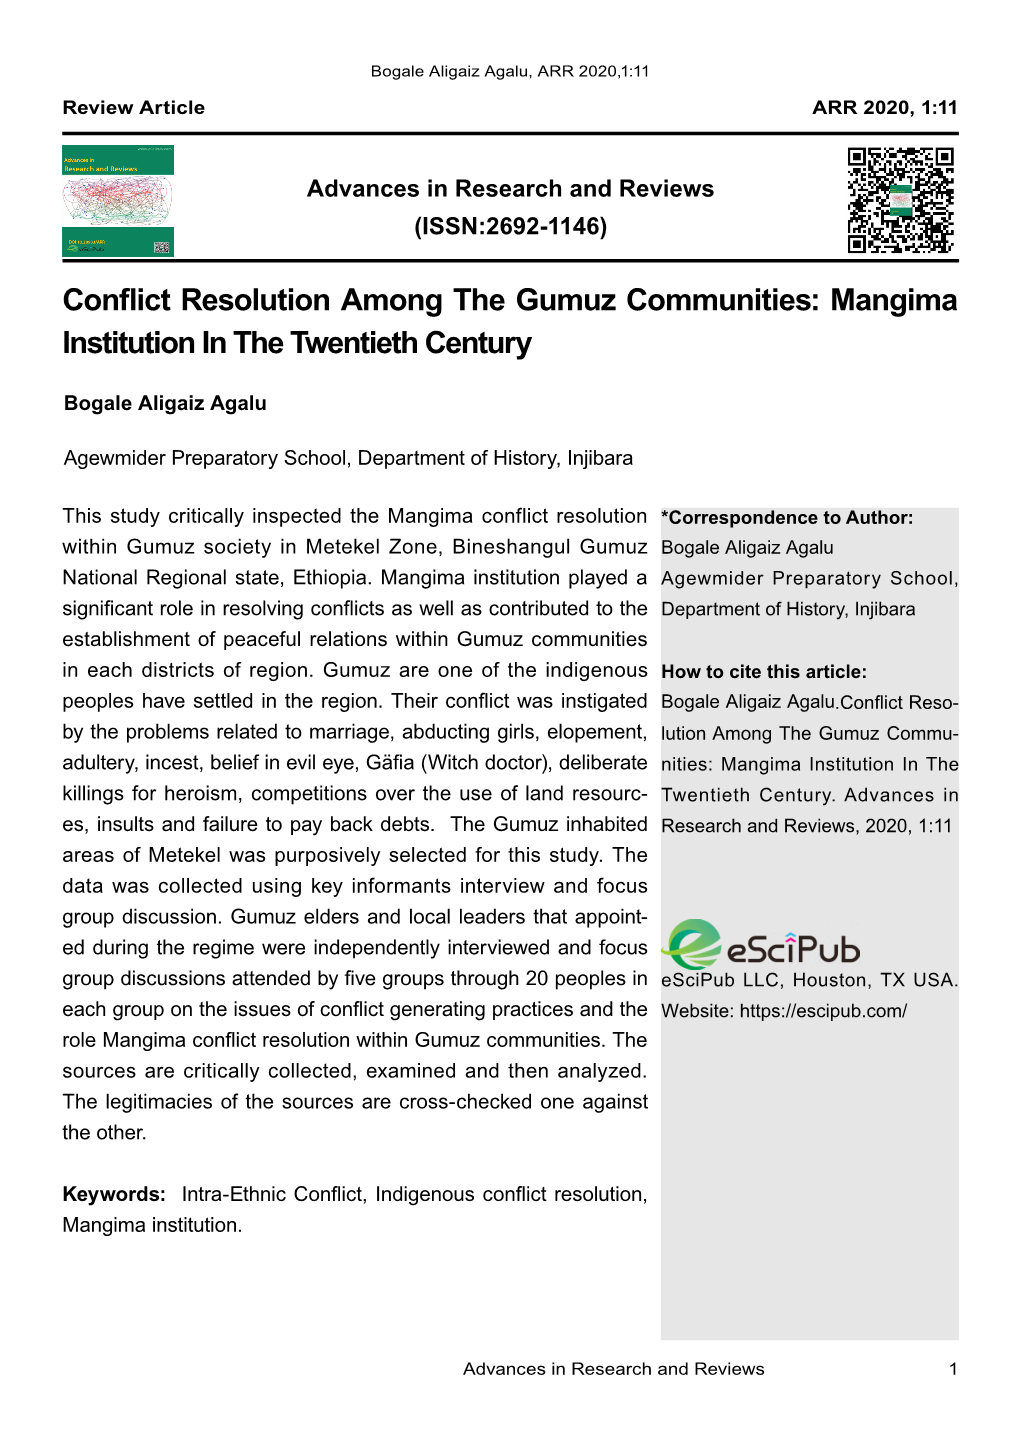 Conflict Resolution Among the Gumuz Communities: Mangima Institution in the Twentieth Century